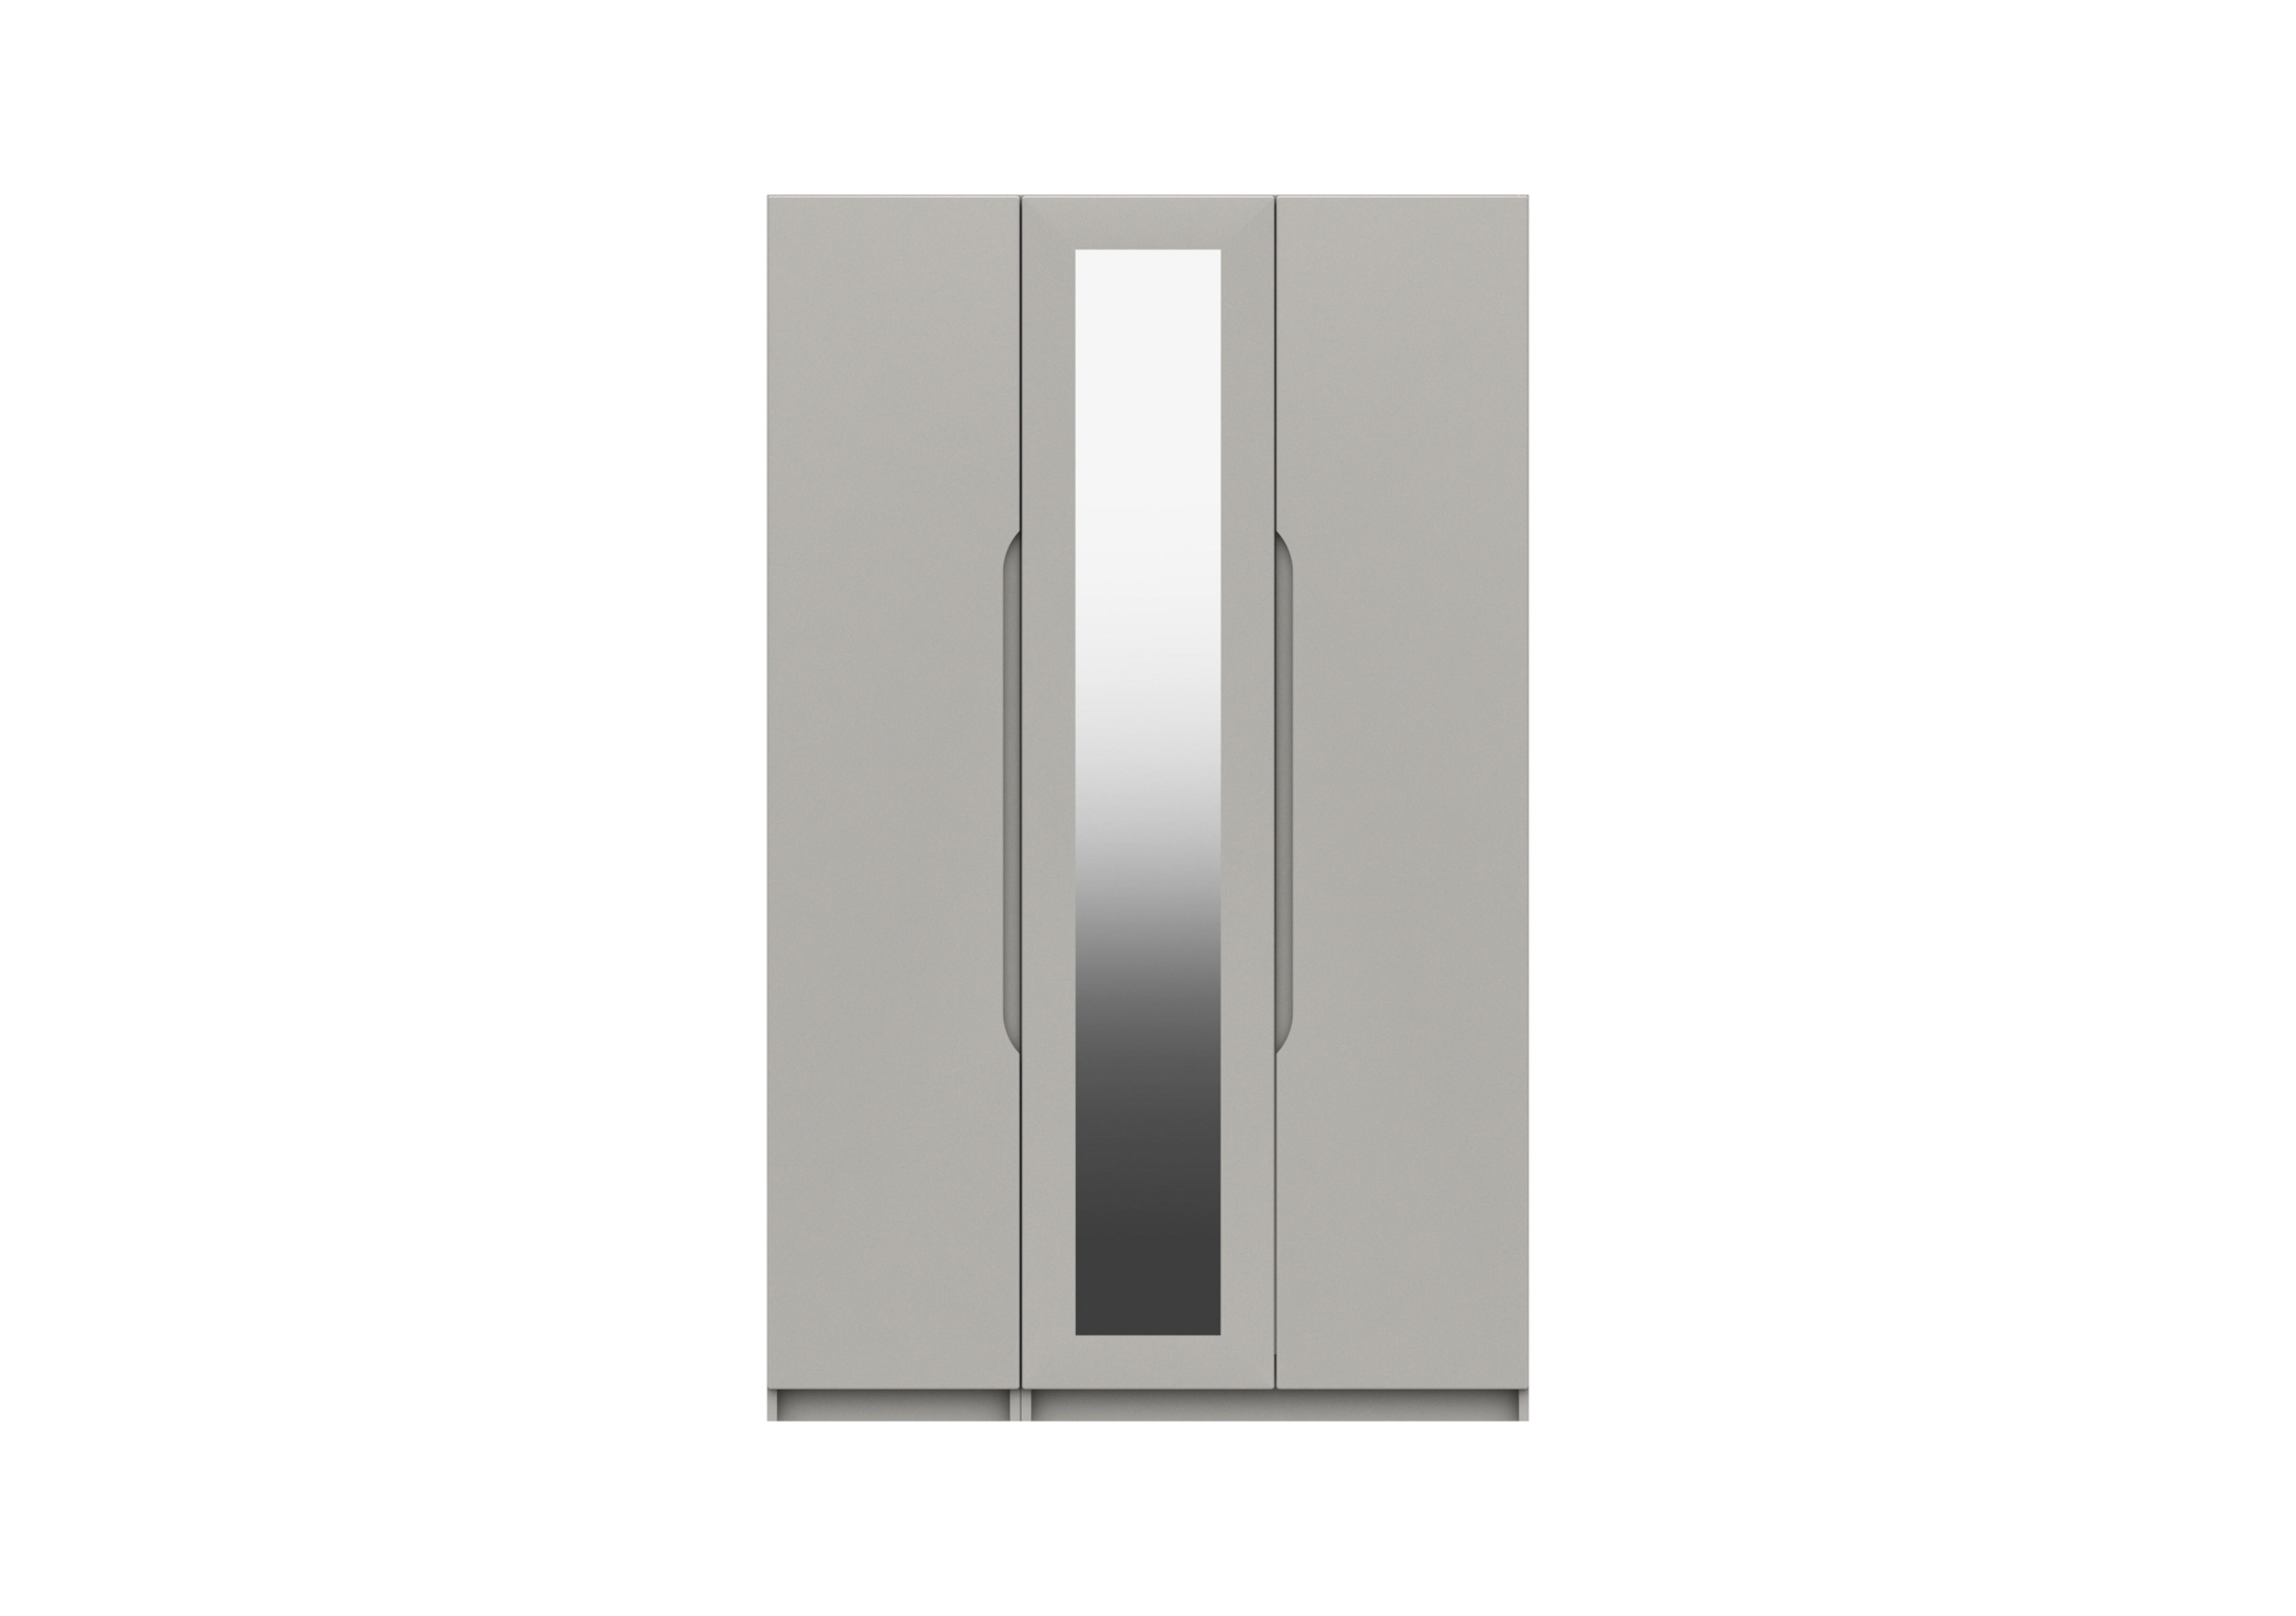 St Pancras 3 Door Wardrobe with Mirror in Light Grey Gloss on Furniture Village